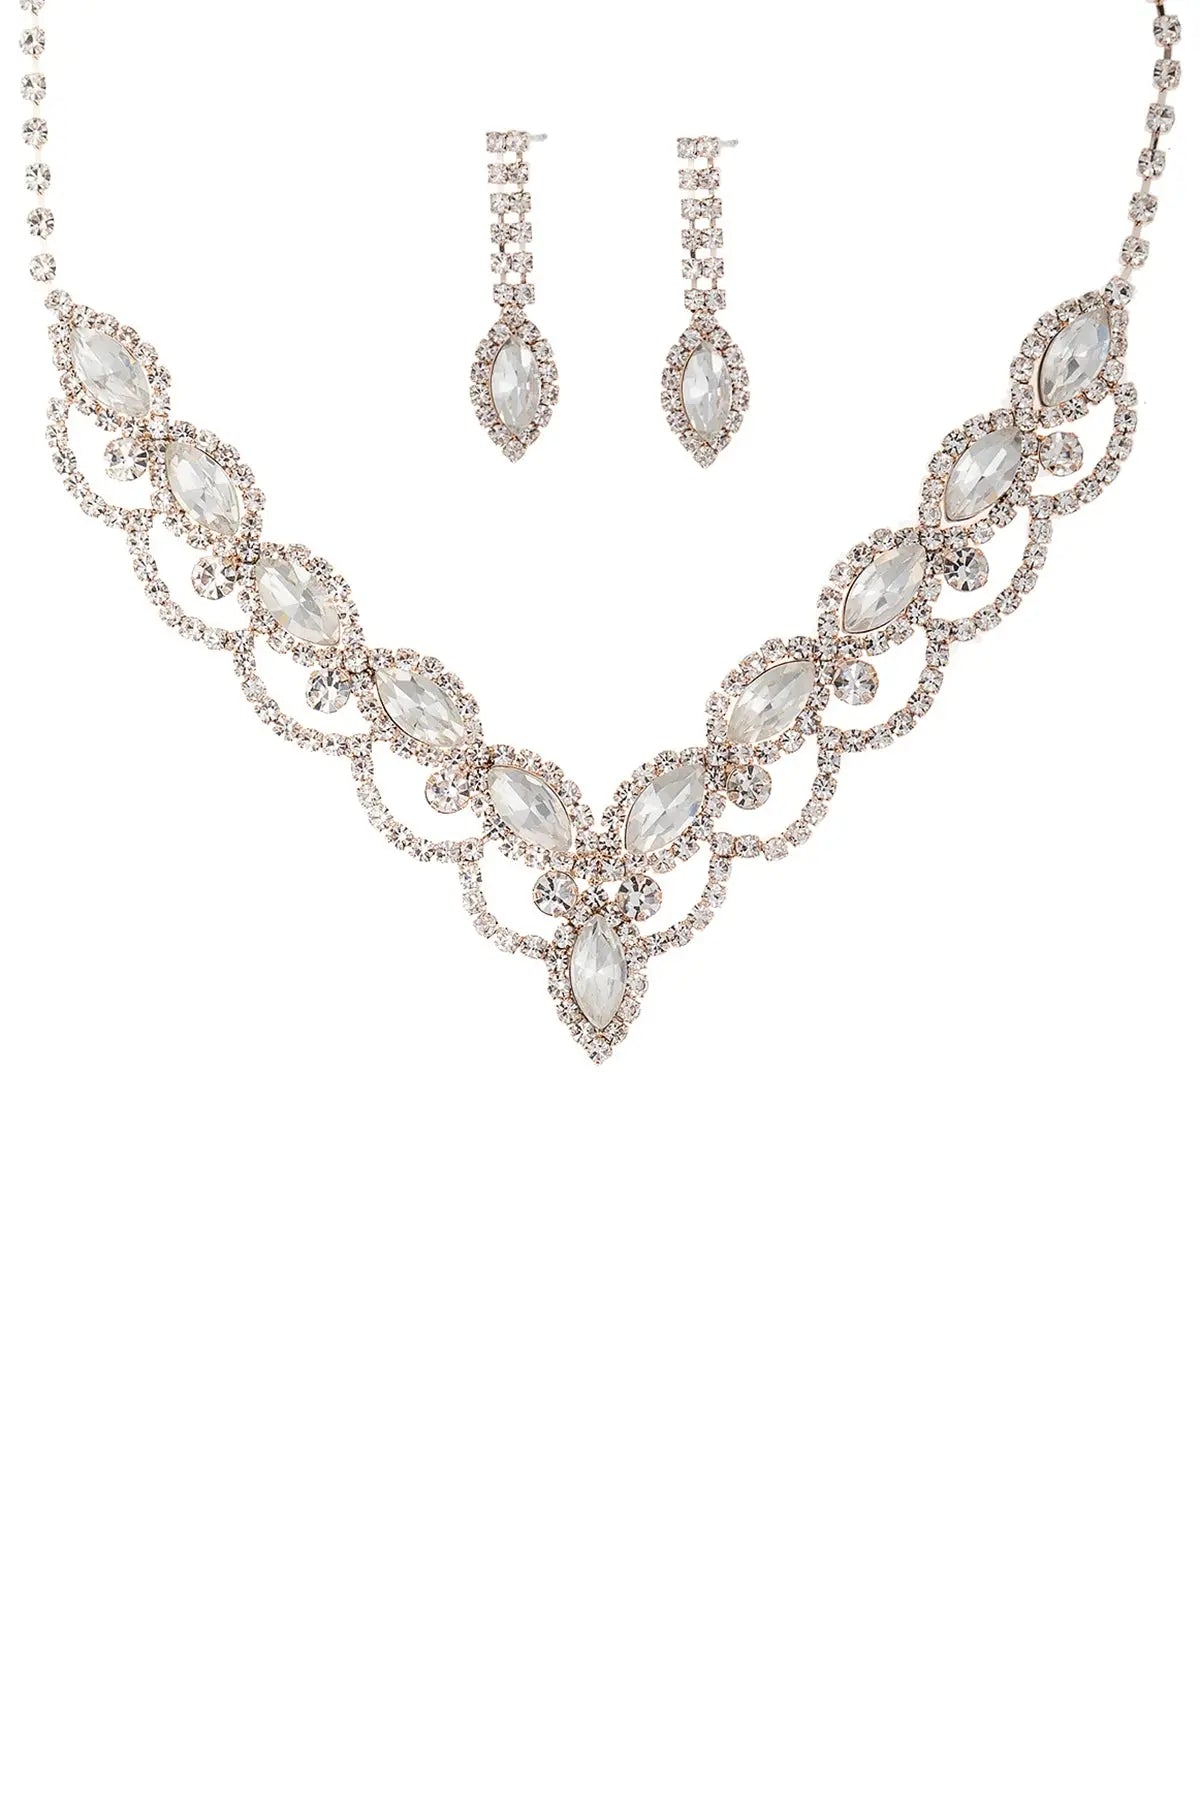 Rhinestone Teardrop V Shape Necklace And Earring Set Sunny EvE Fashion